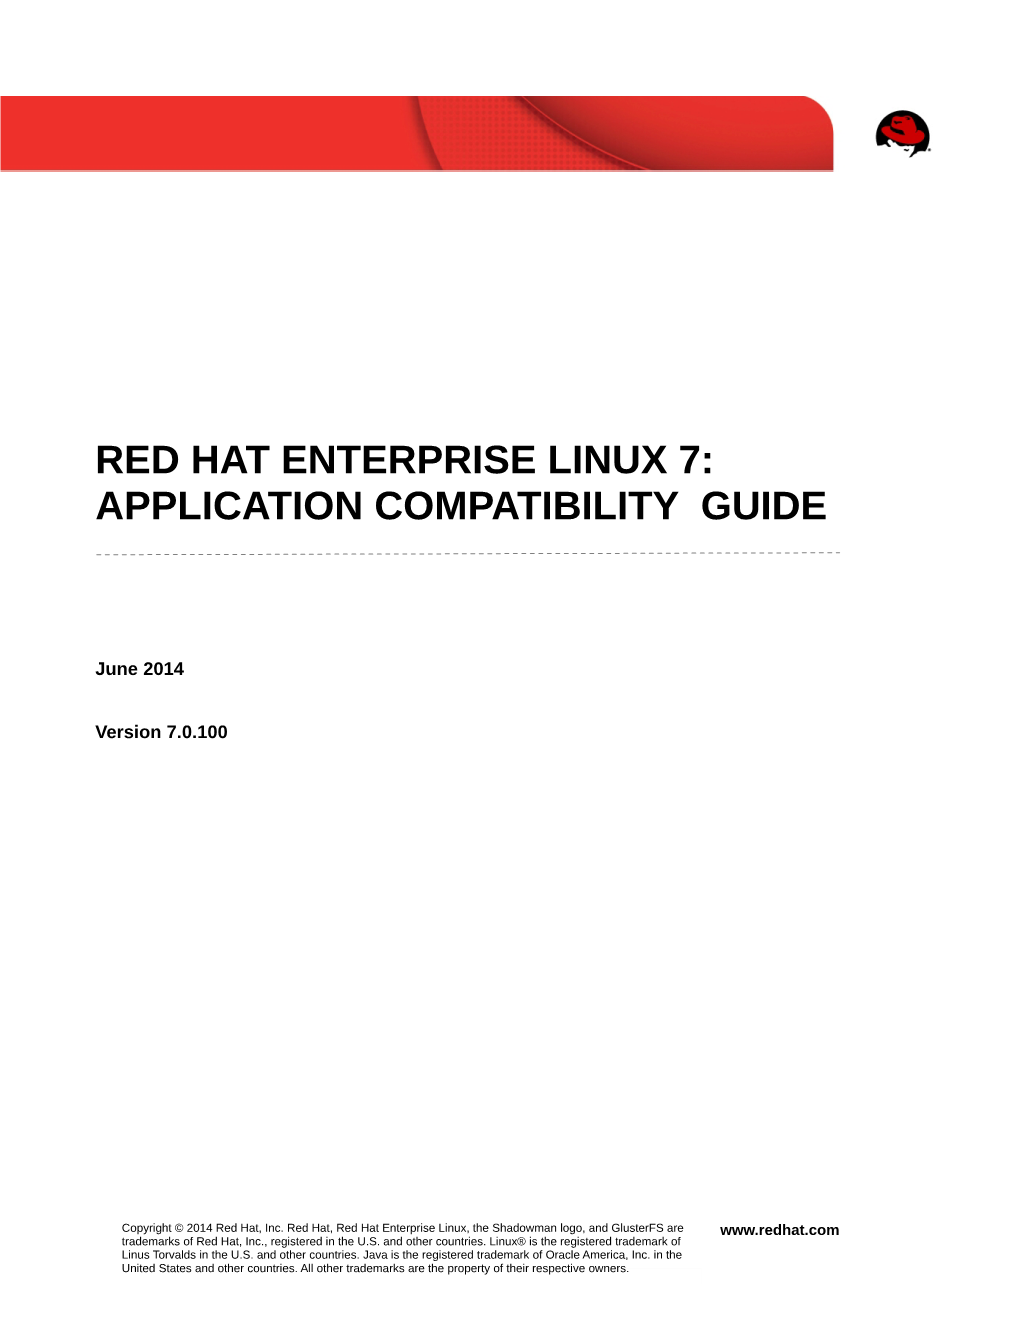 Red Hat Enterprise Linux 7: Application Compatibility Guide